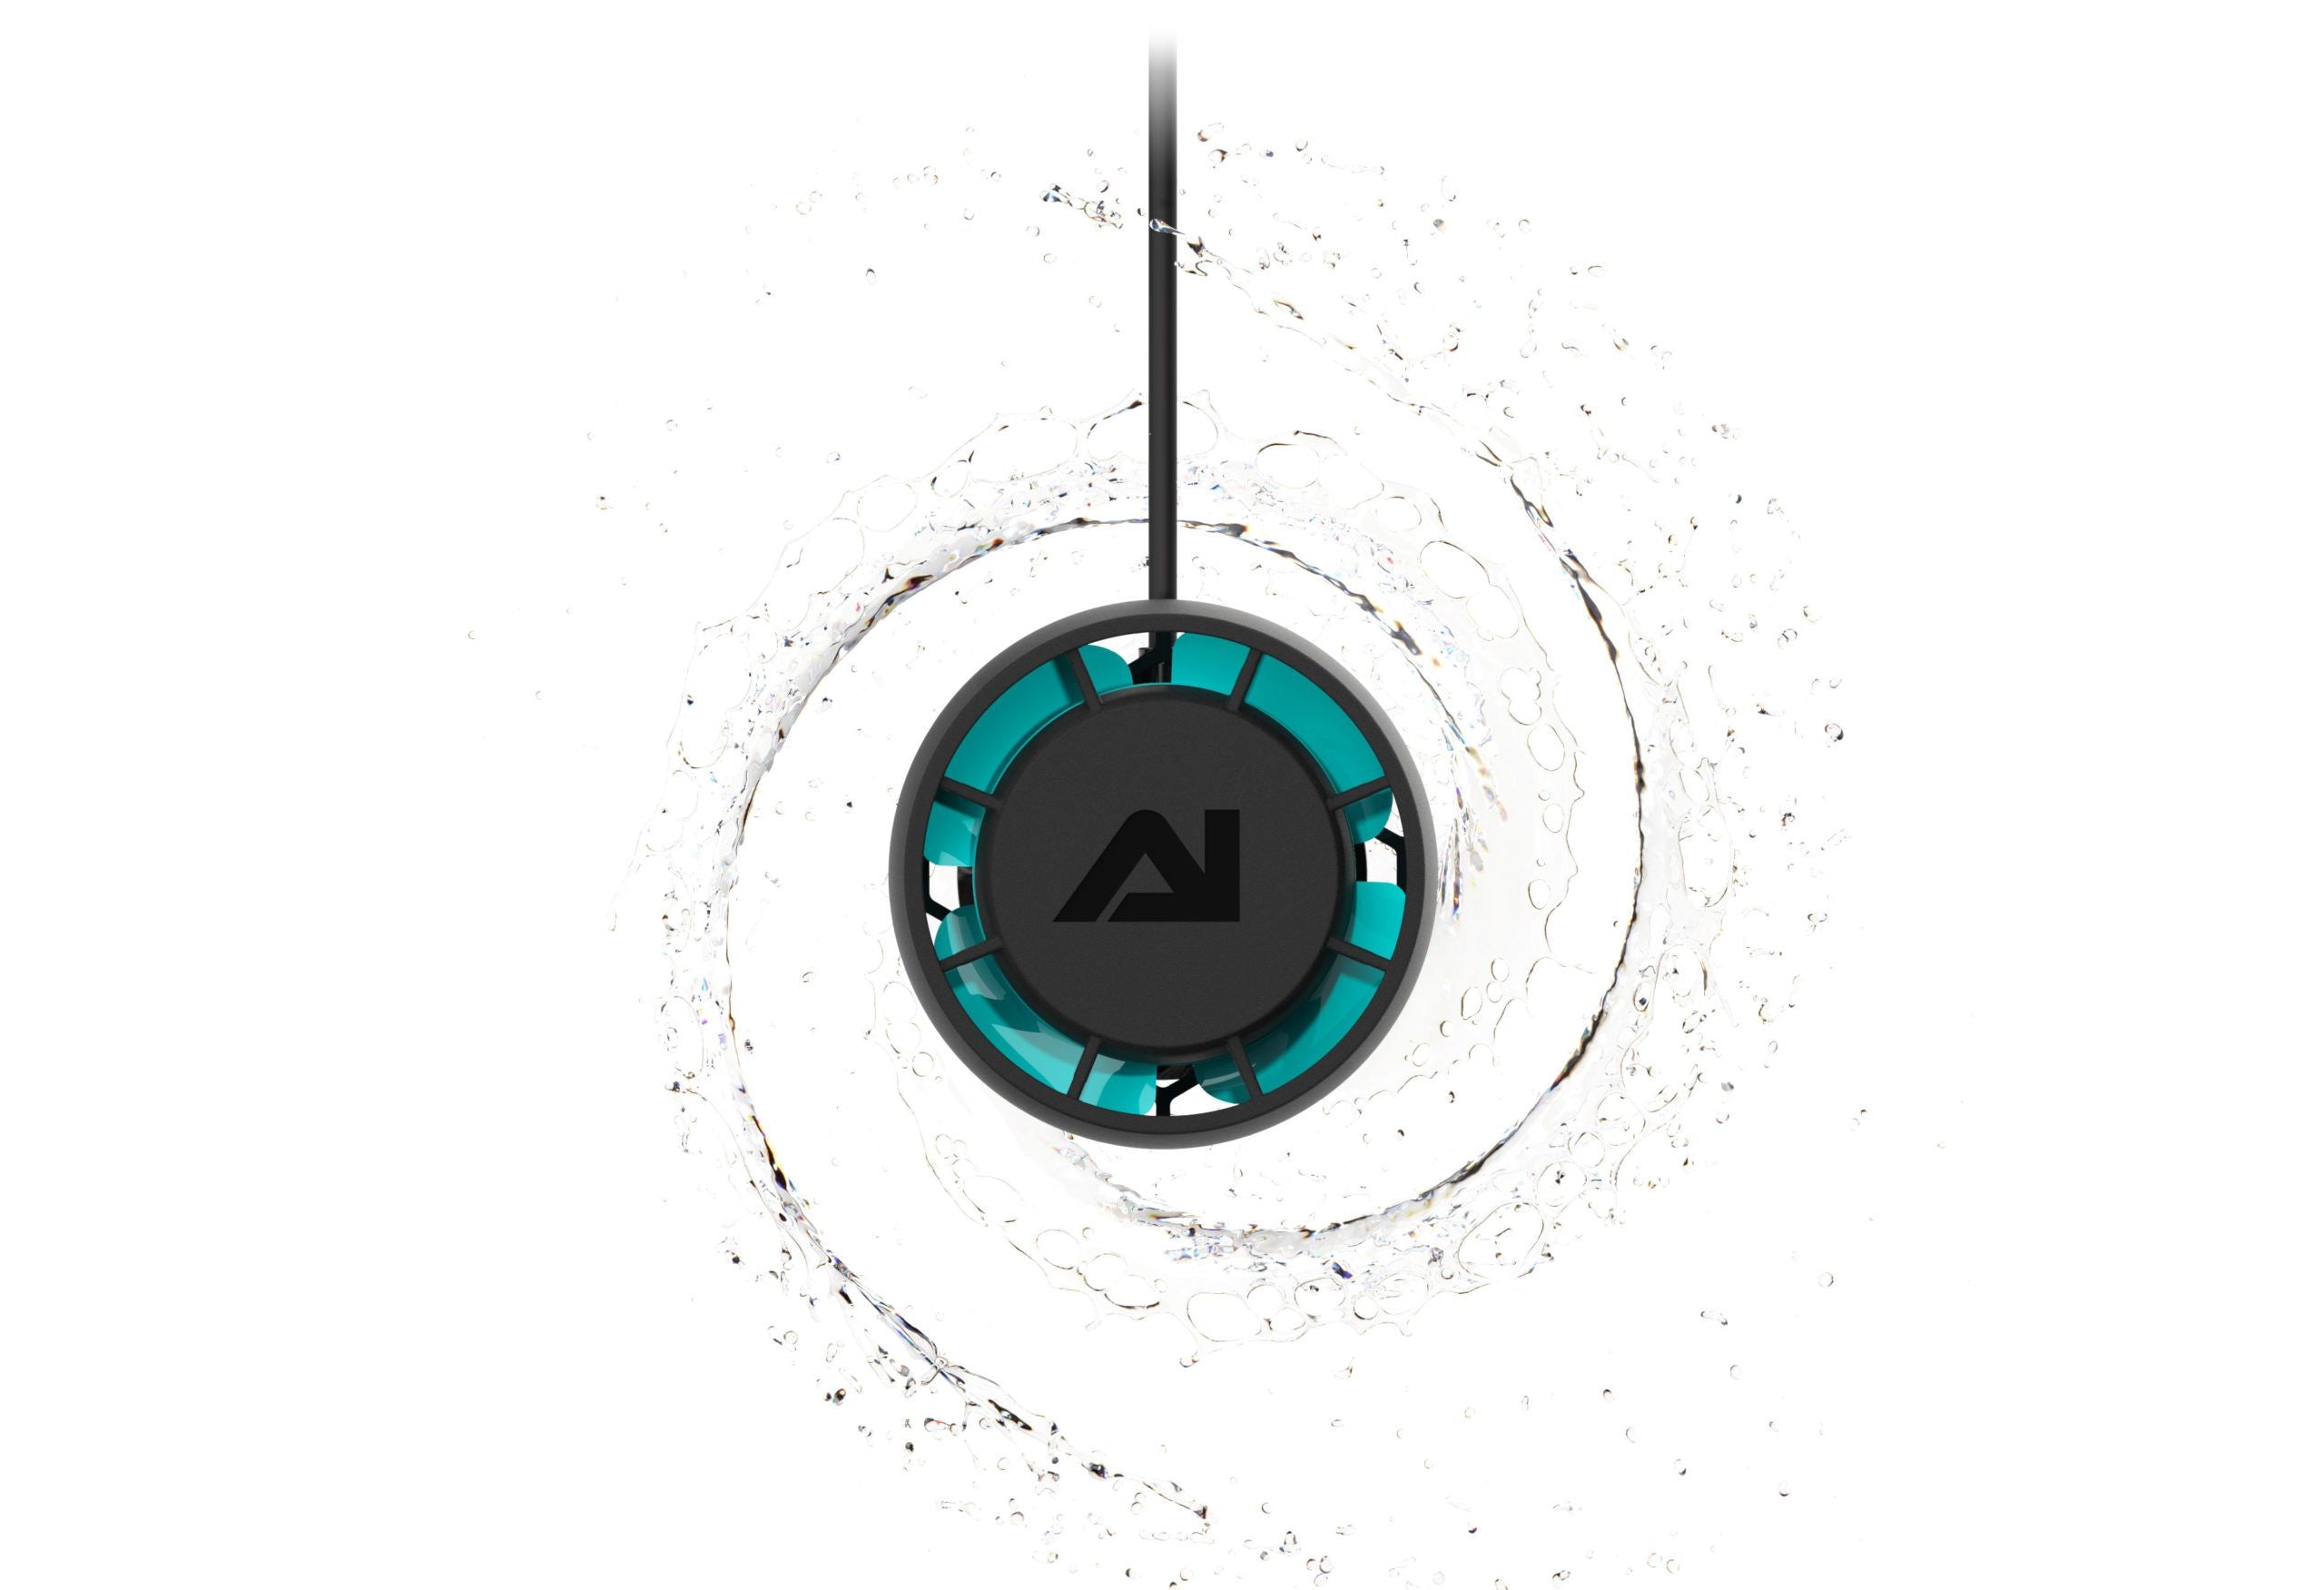 Detail photo for Aqua Illumination AI Nero 3 Powerhead Submersible Pump Kit